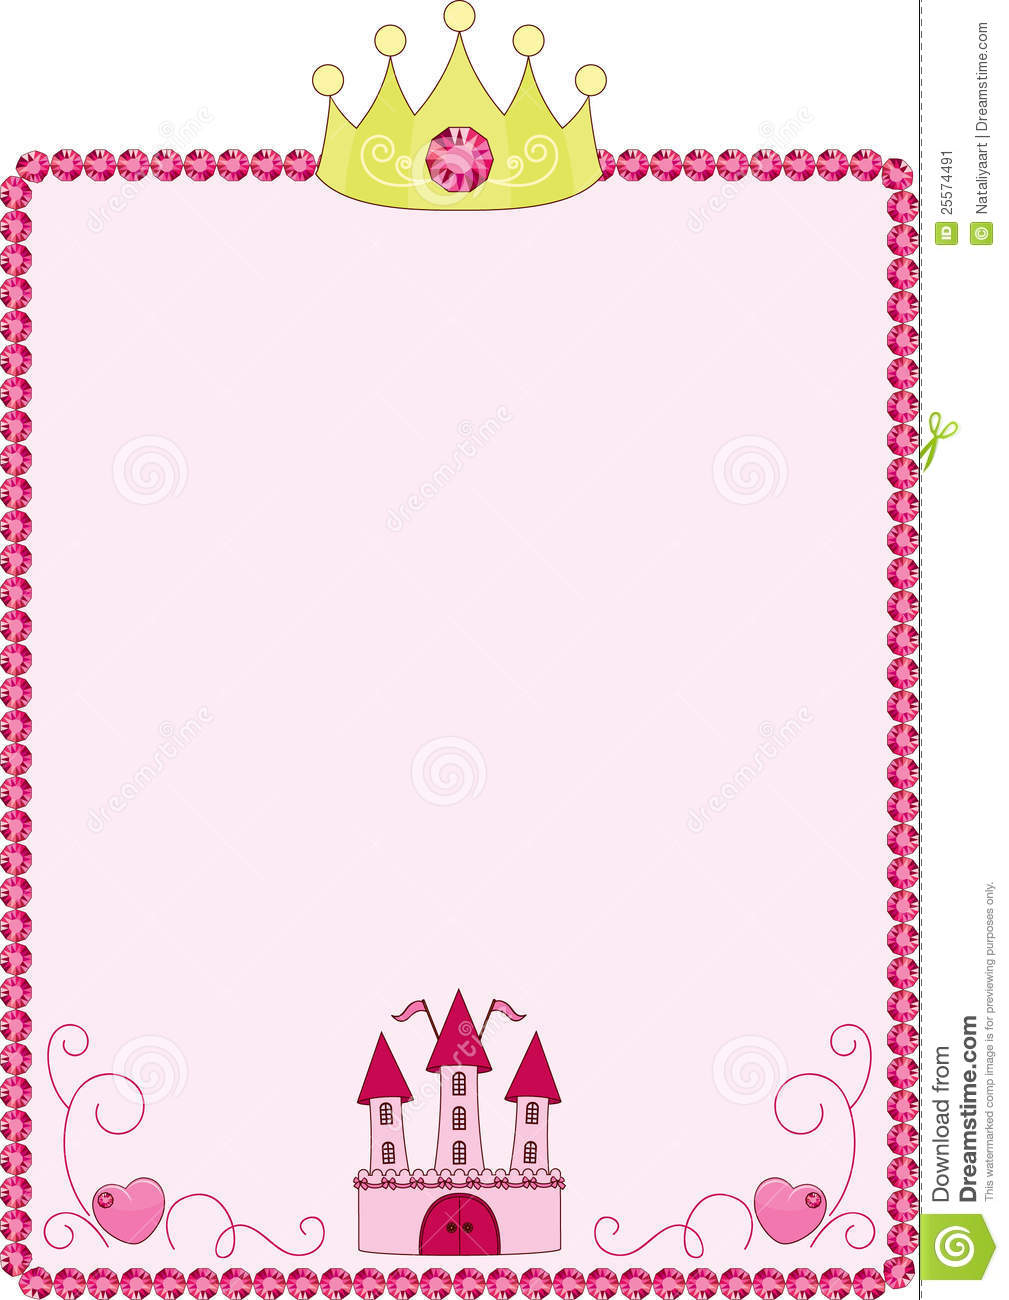 Princess Pink Frame Stock Image   Image  25574491